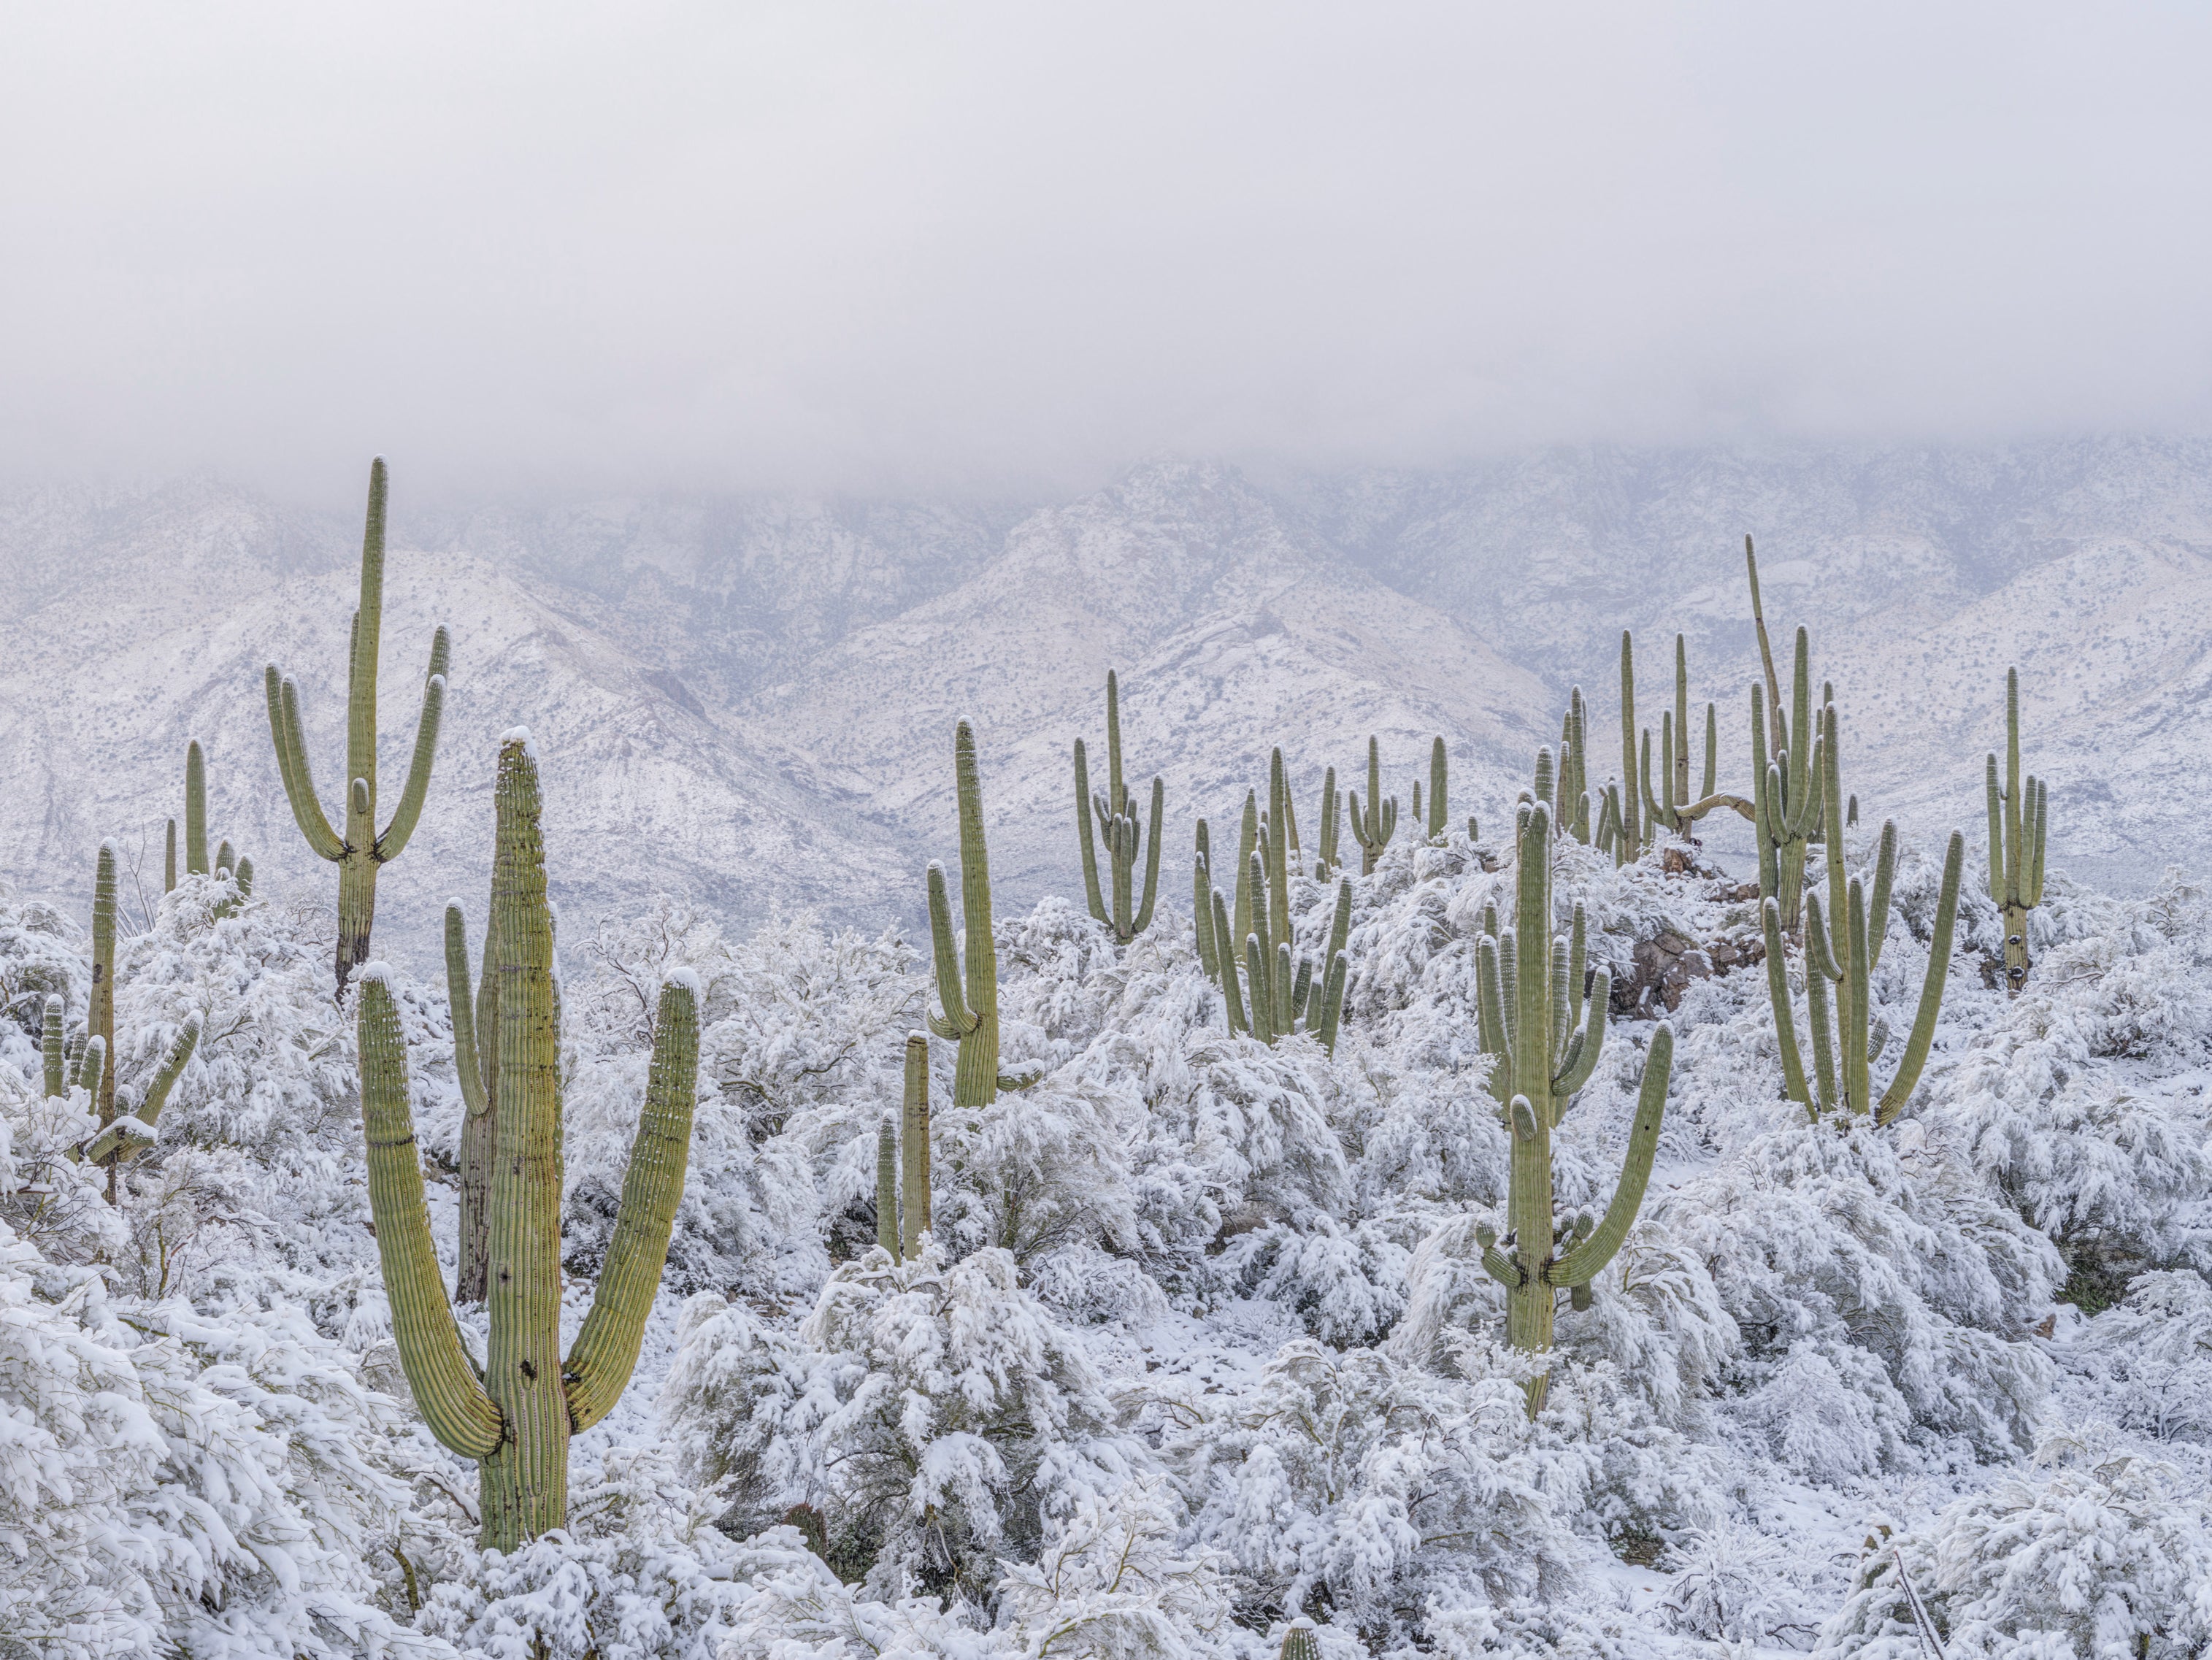 Snow surrounds the cacti in Arizona’s Sonoran Desert